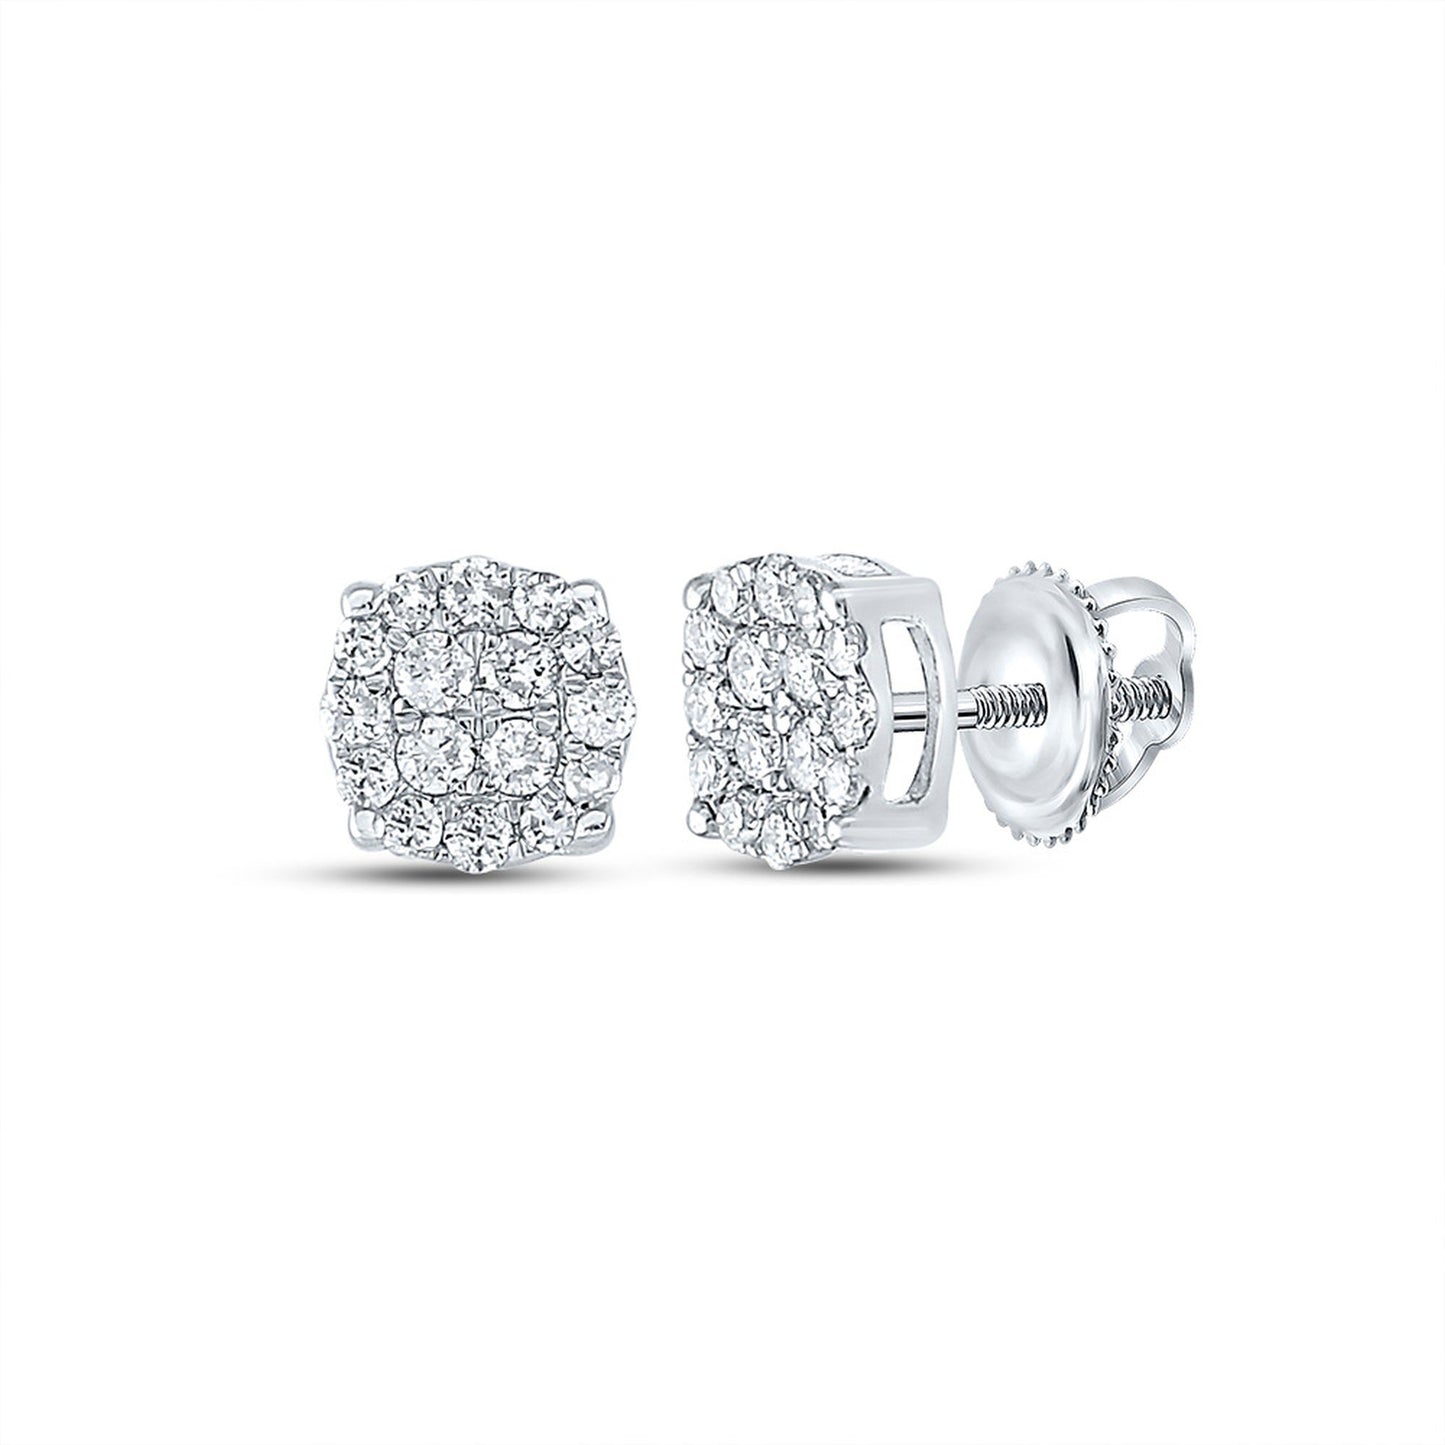 GND 10kt White Gold Mens Round Diamond Cluster Earrings 1/4 Cttw